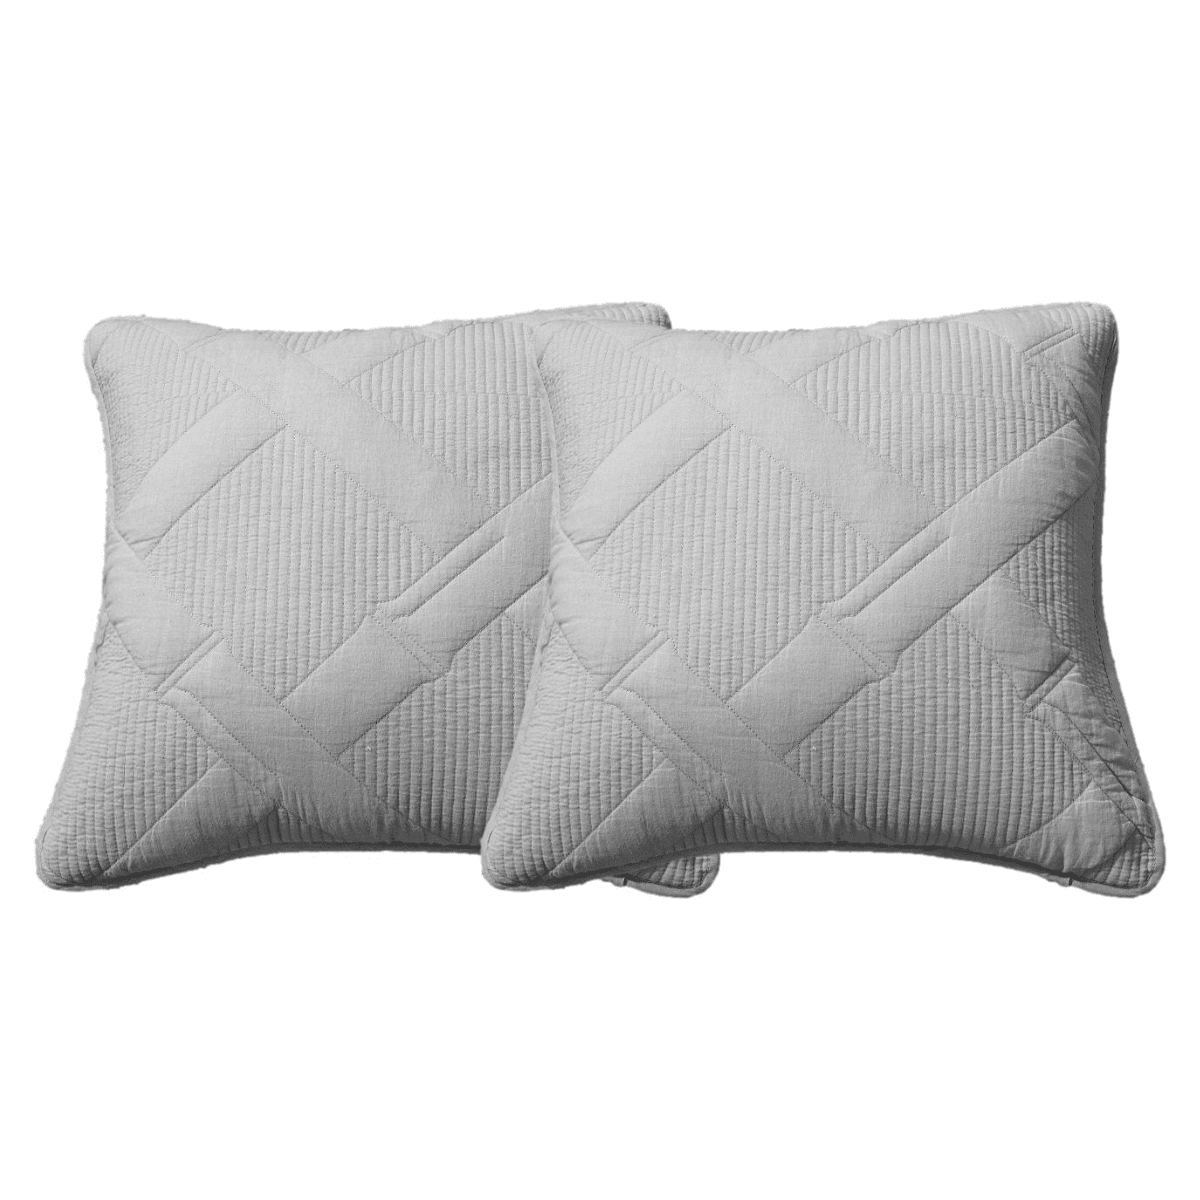 Tache Cotton Light Grey Silver Soothing Pastel Cushion Covers / Euro Sham (JHW-862) - Tache Home Fashion